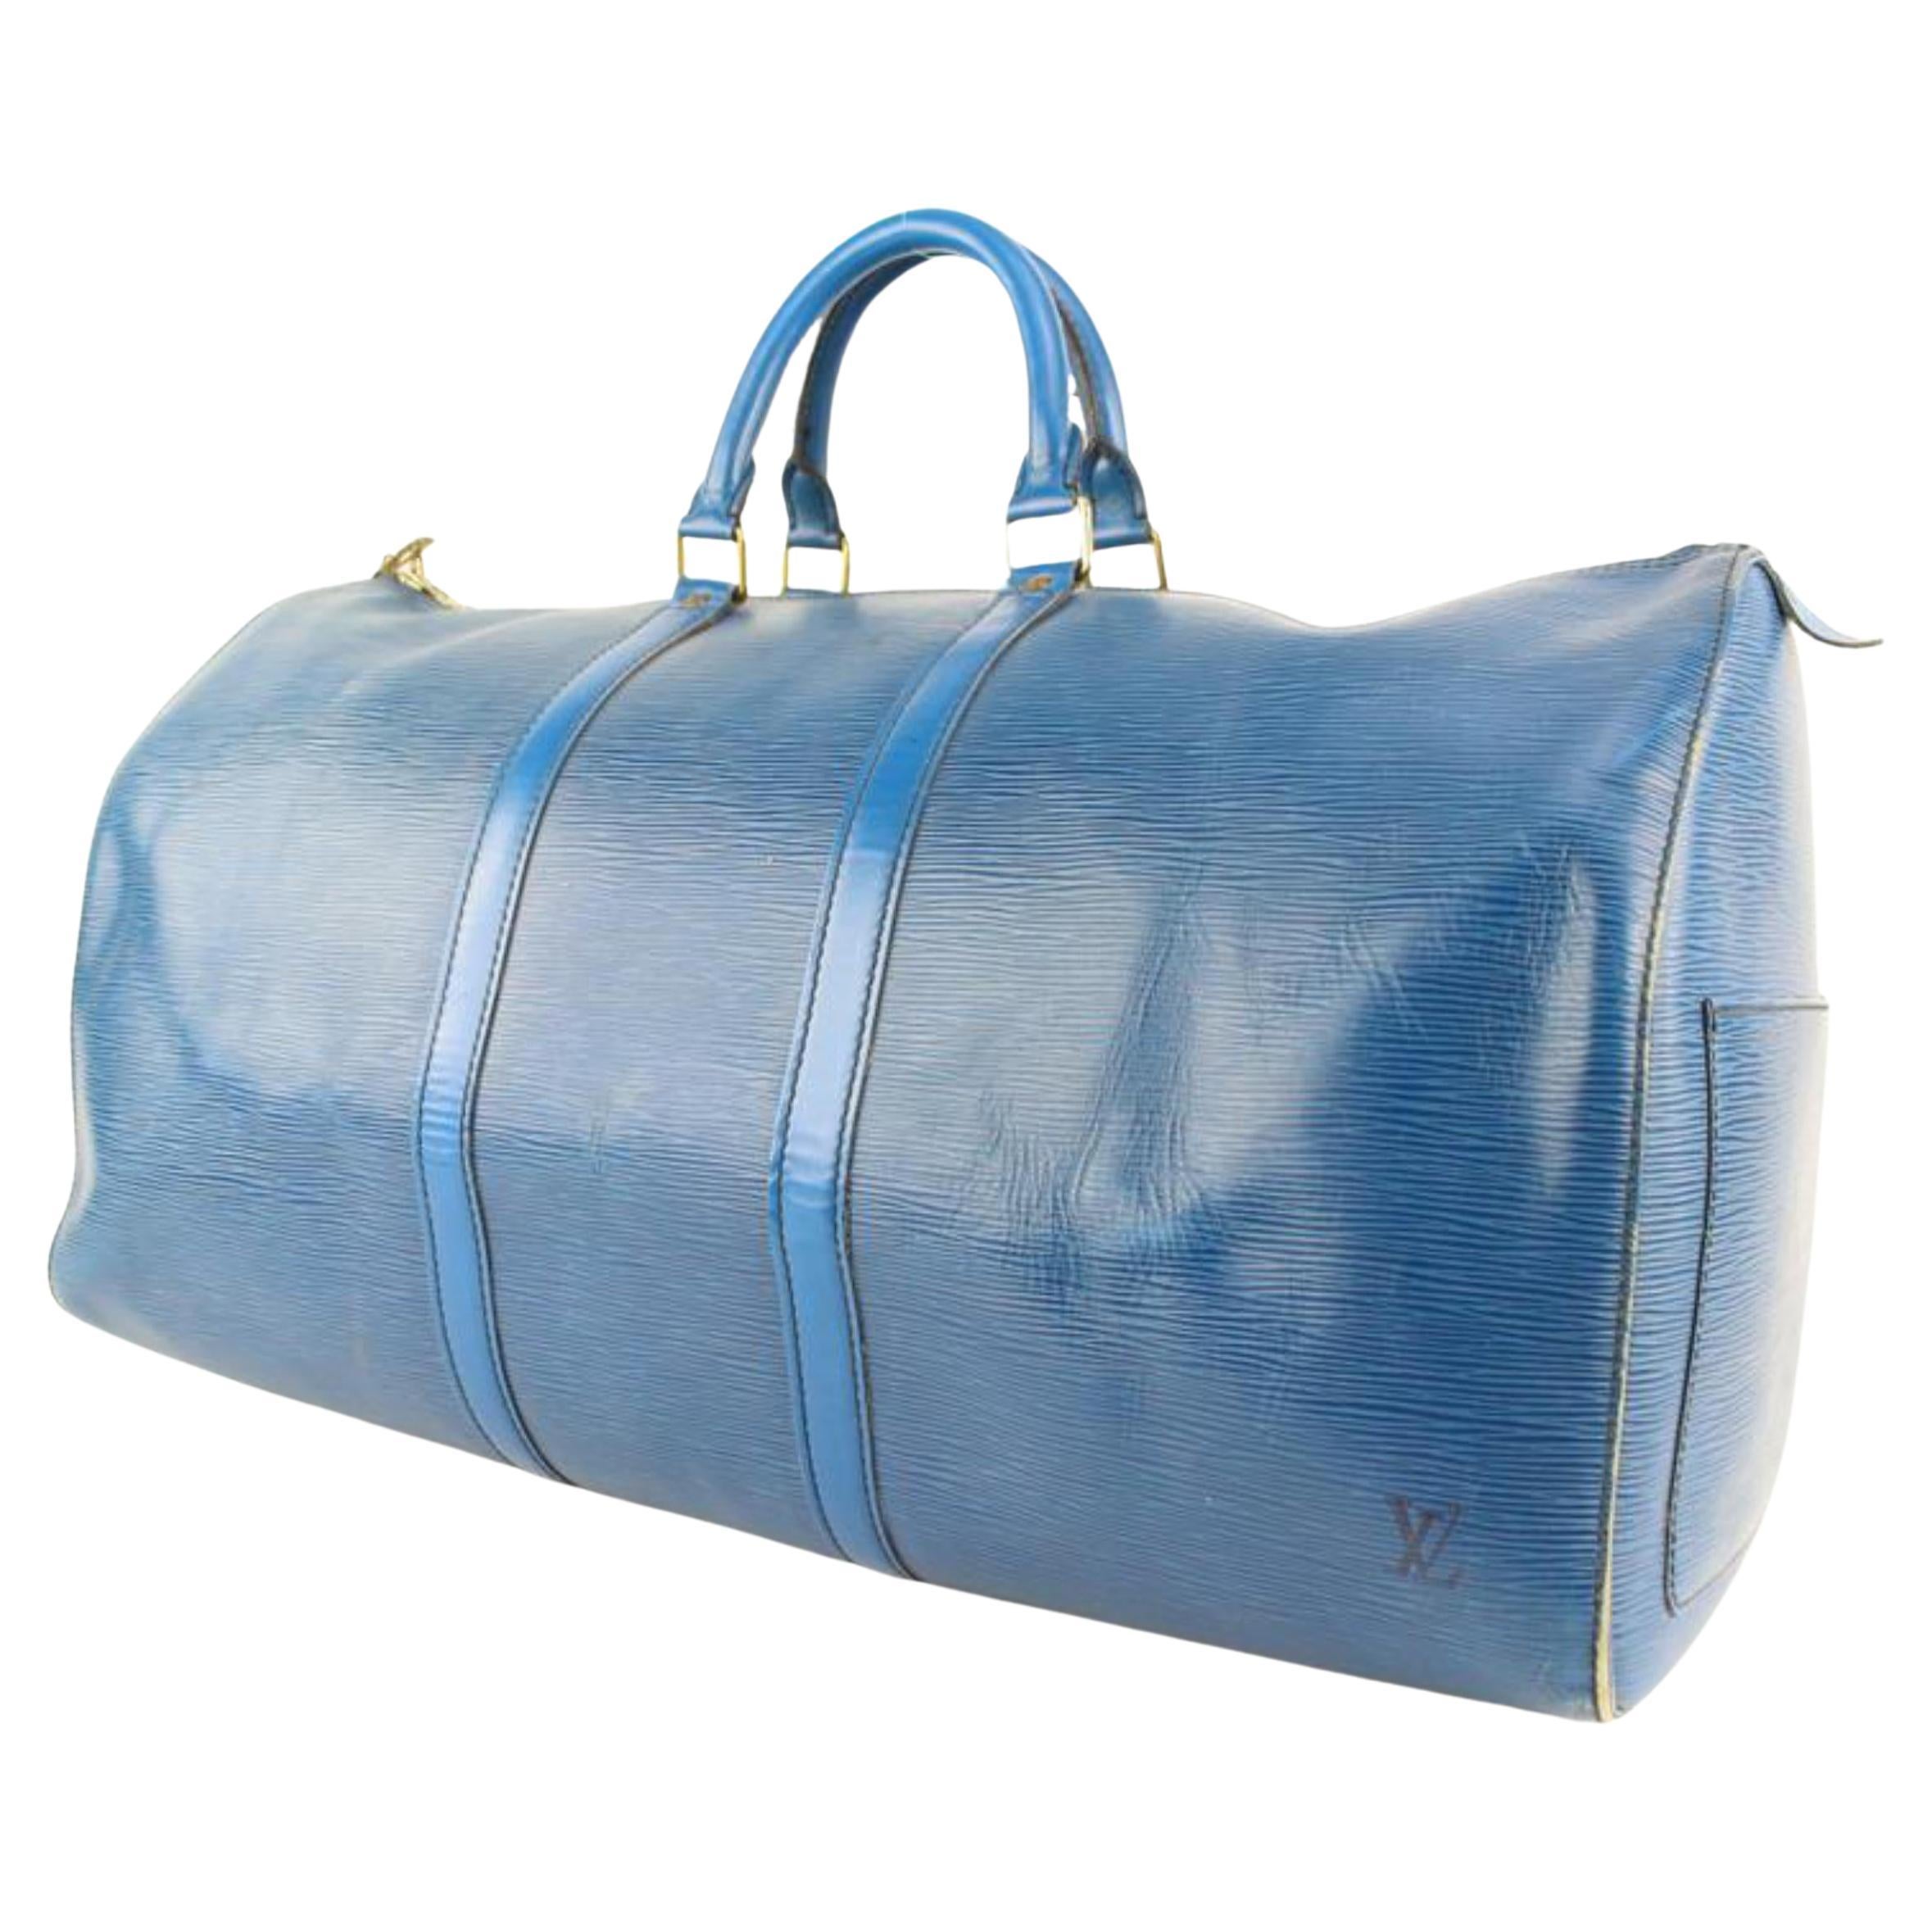 blue louis vuitton luggage